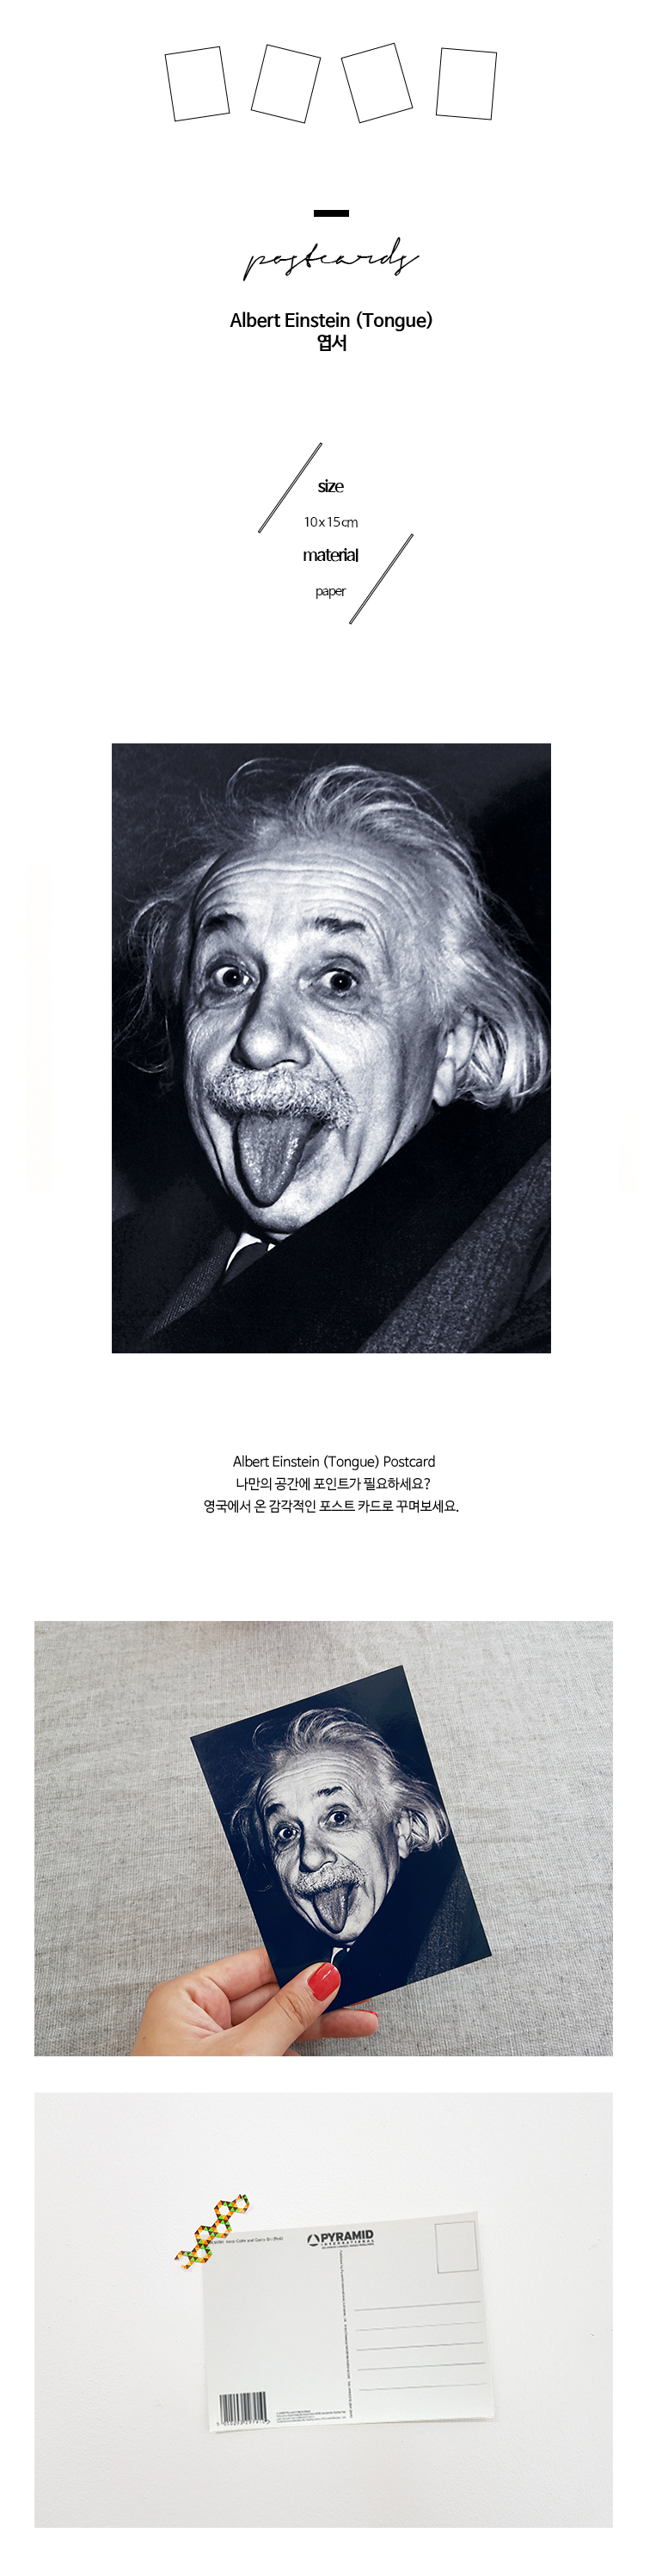 [PYRAMID] 알버트 Einstein(Tongue) 엽서 1,200원 - 브리스크스타일 디자인문구, 카드/편지/봉투, 엽서, 포토 바보사랑 [PYRAMID] 알버트 Einstein(Tongue) 엽서 1,200원 - 브리스크스타일 디자인문구, 카드/편지/봉투, 엽서, 포토 바보사랑